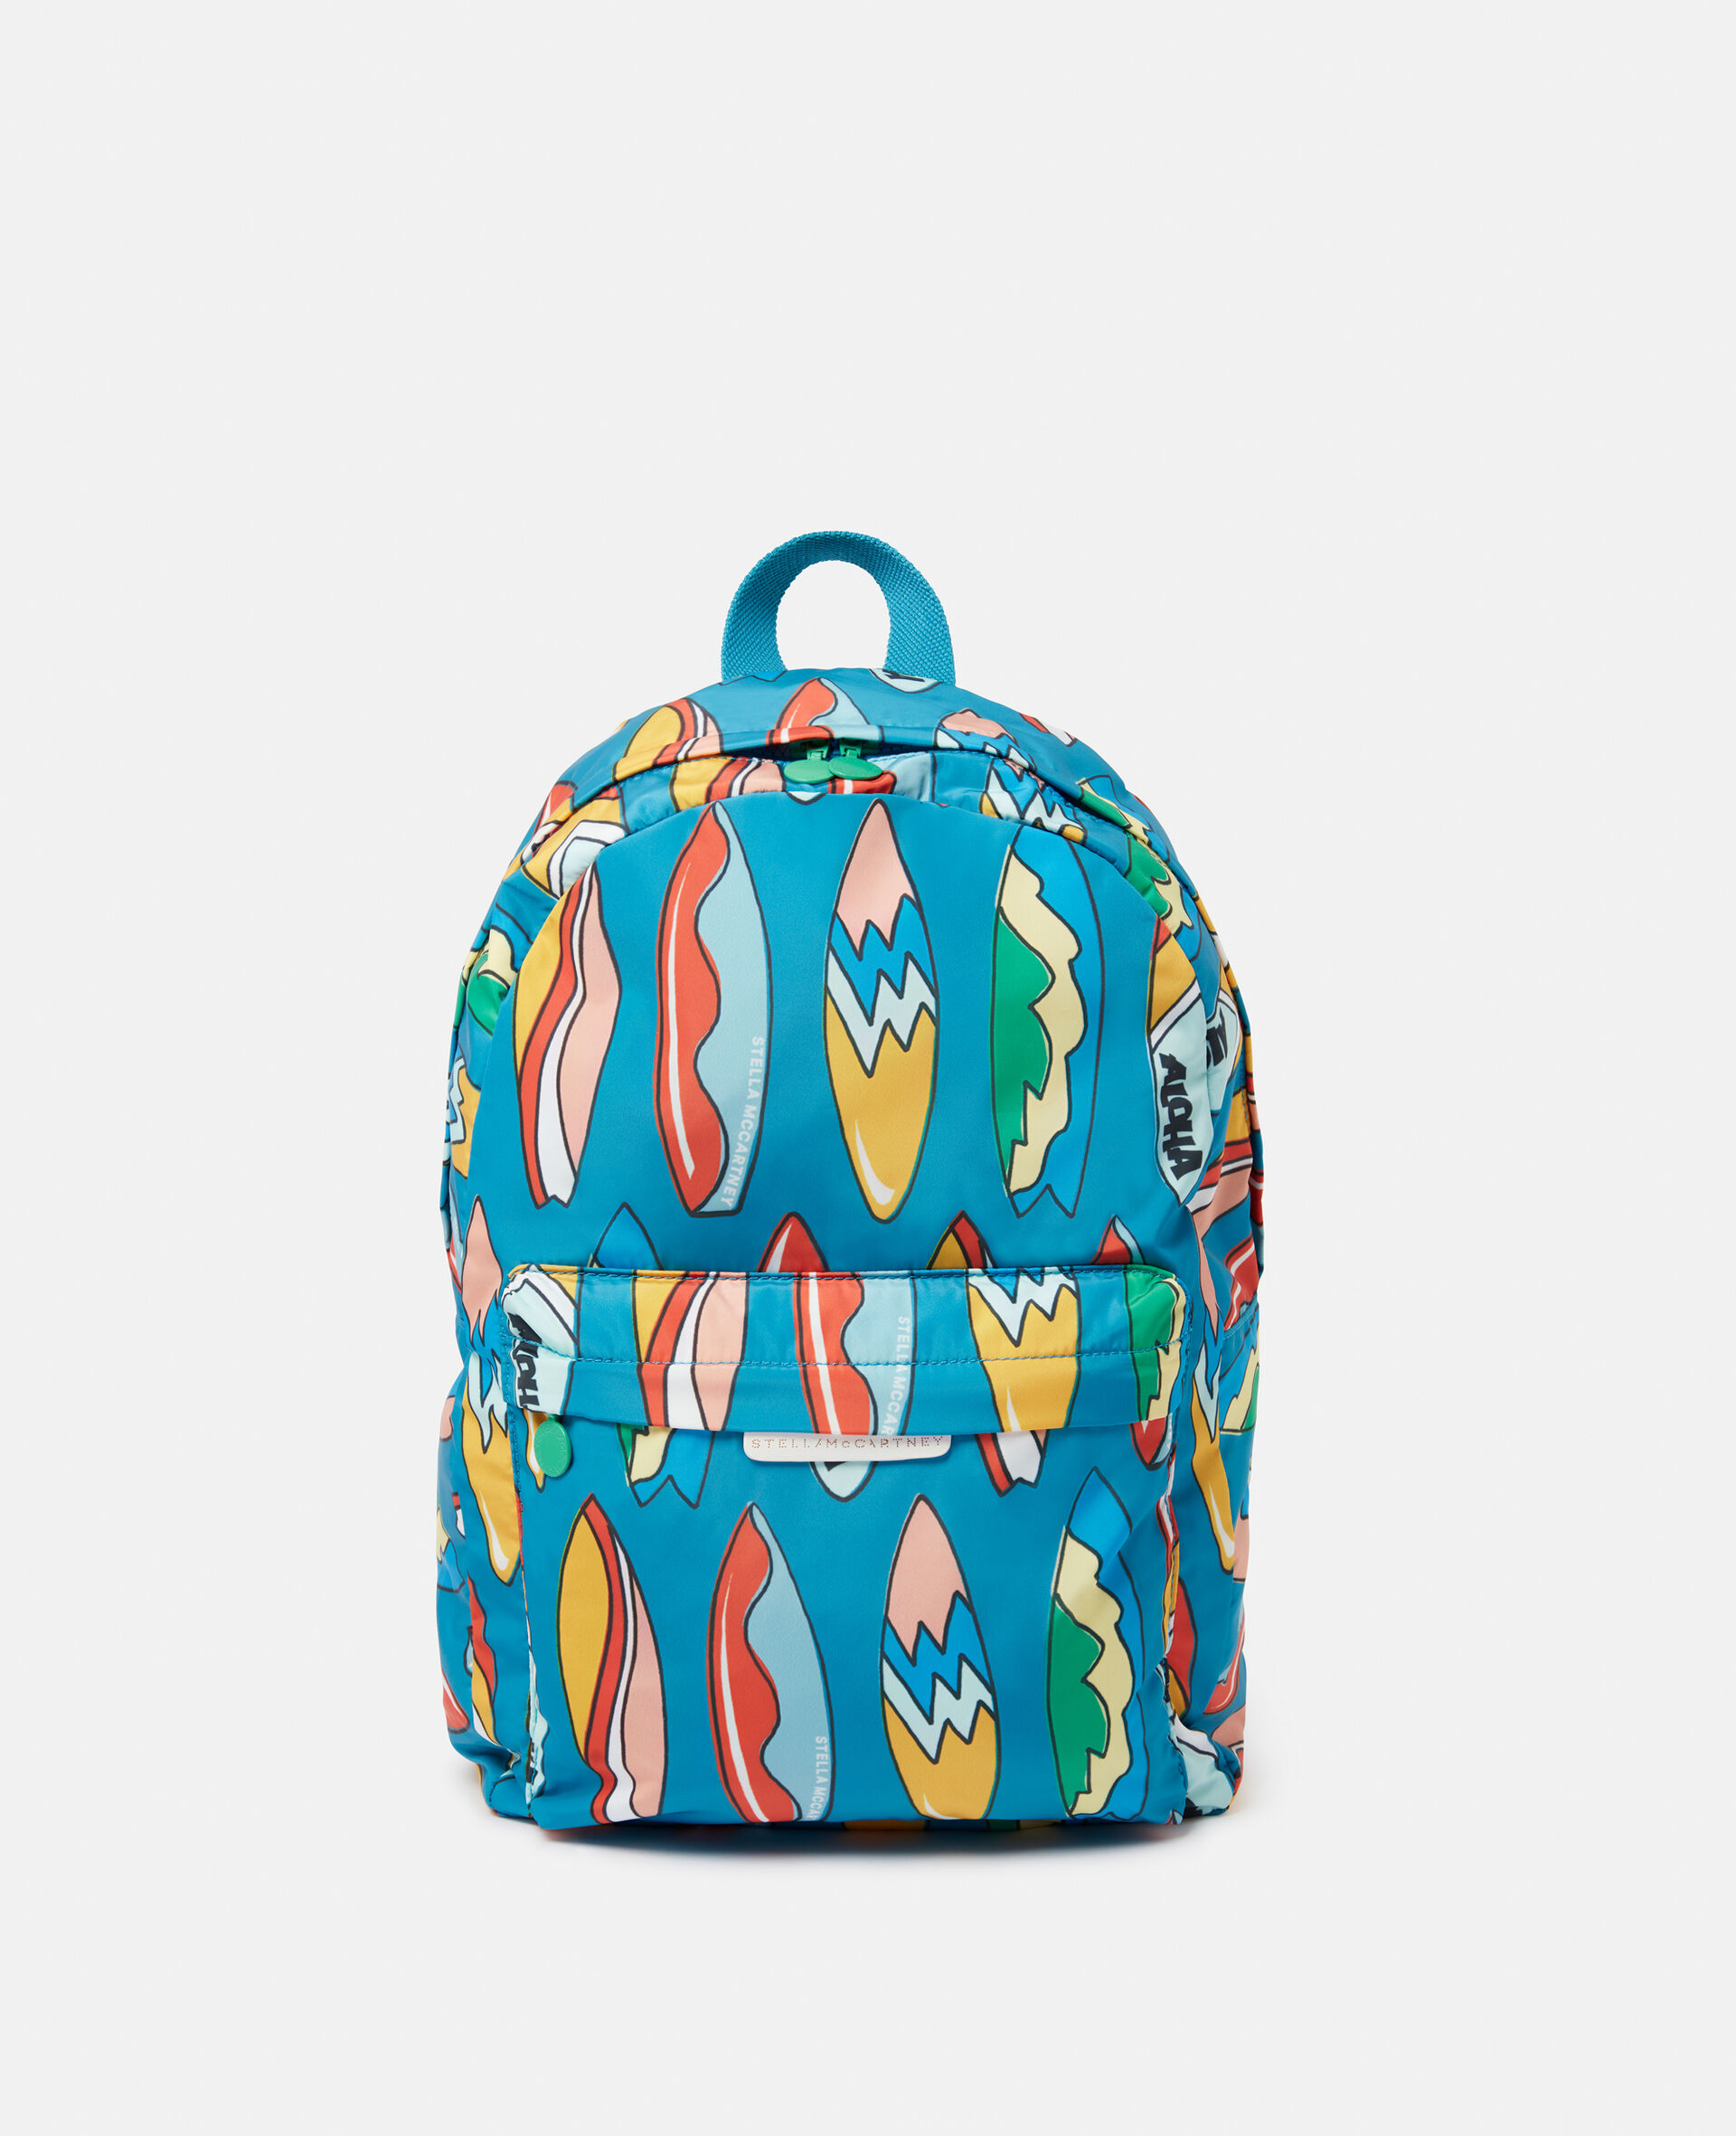 Surfboard Print Backpack-Multicolour-large image number 0